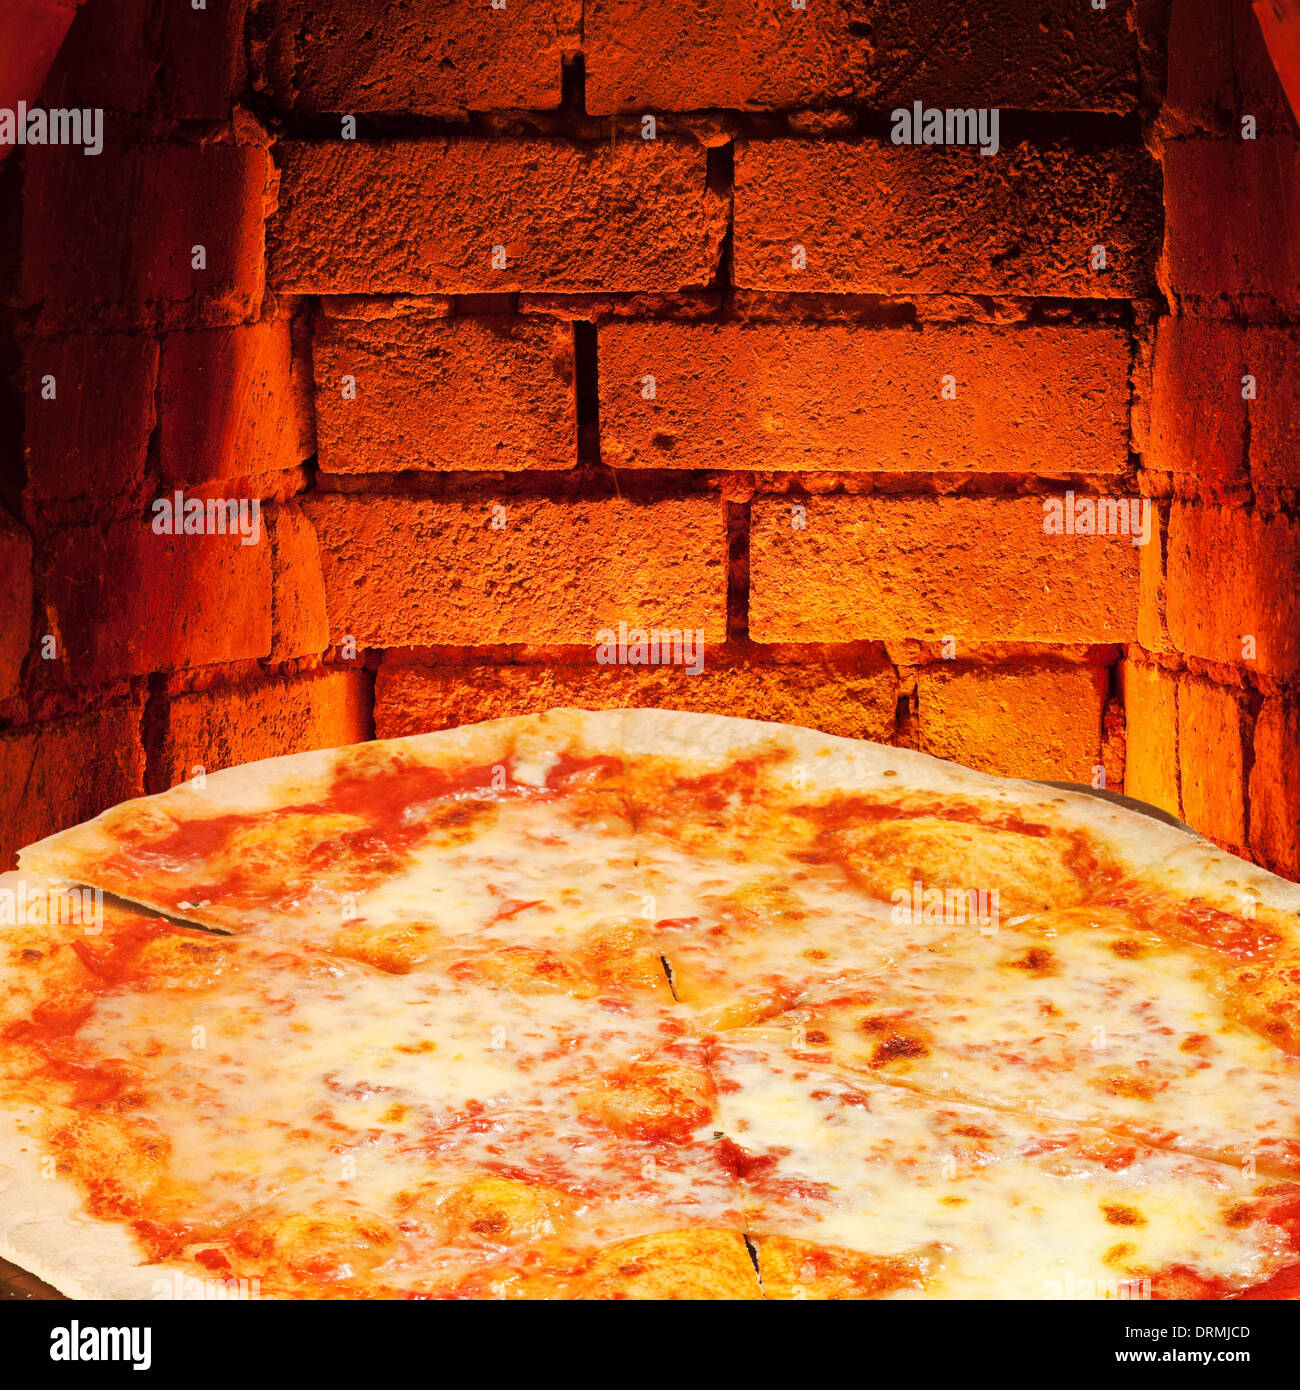 italian pizza margherita and hot brick wall of wood burning oven Stock Photo